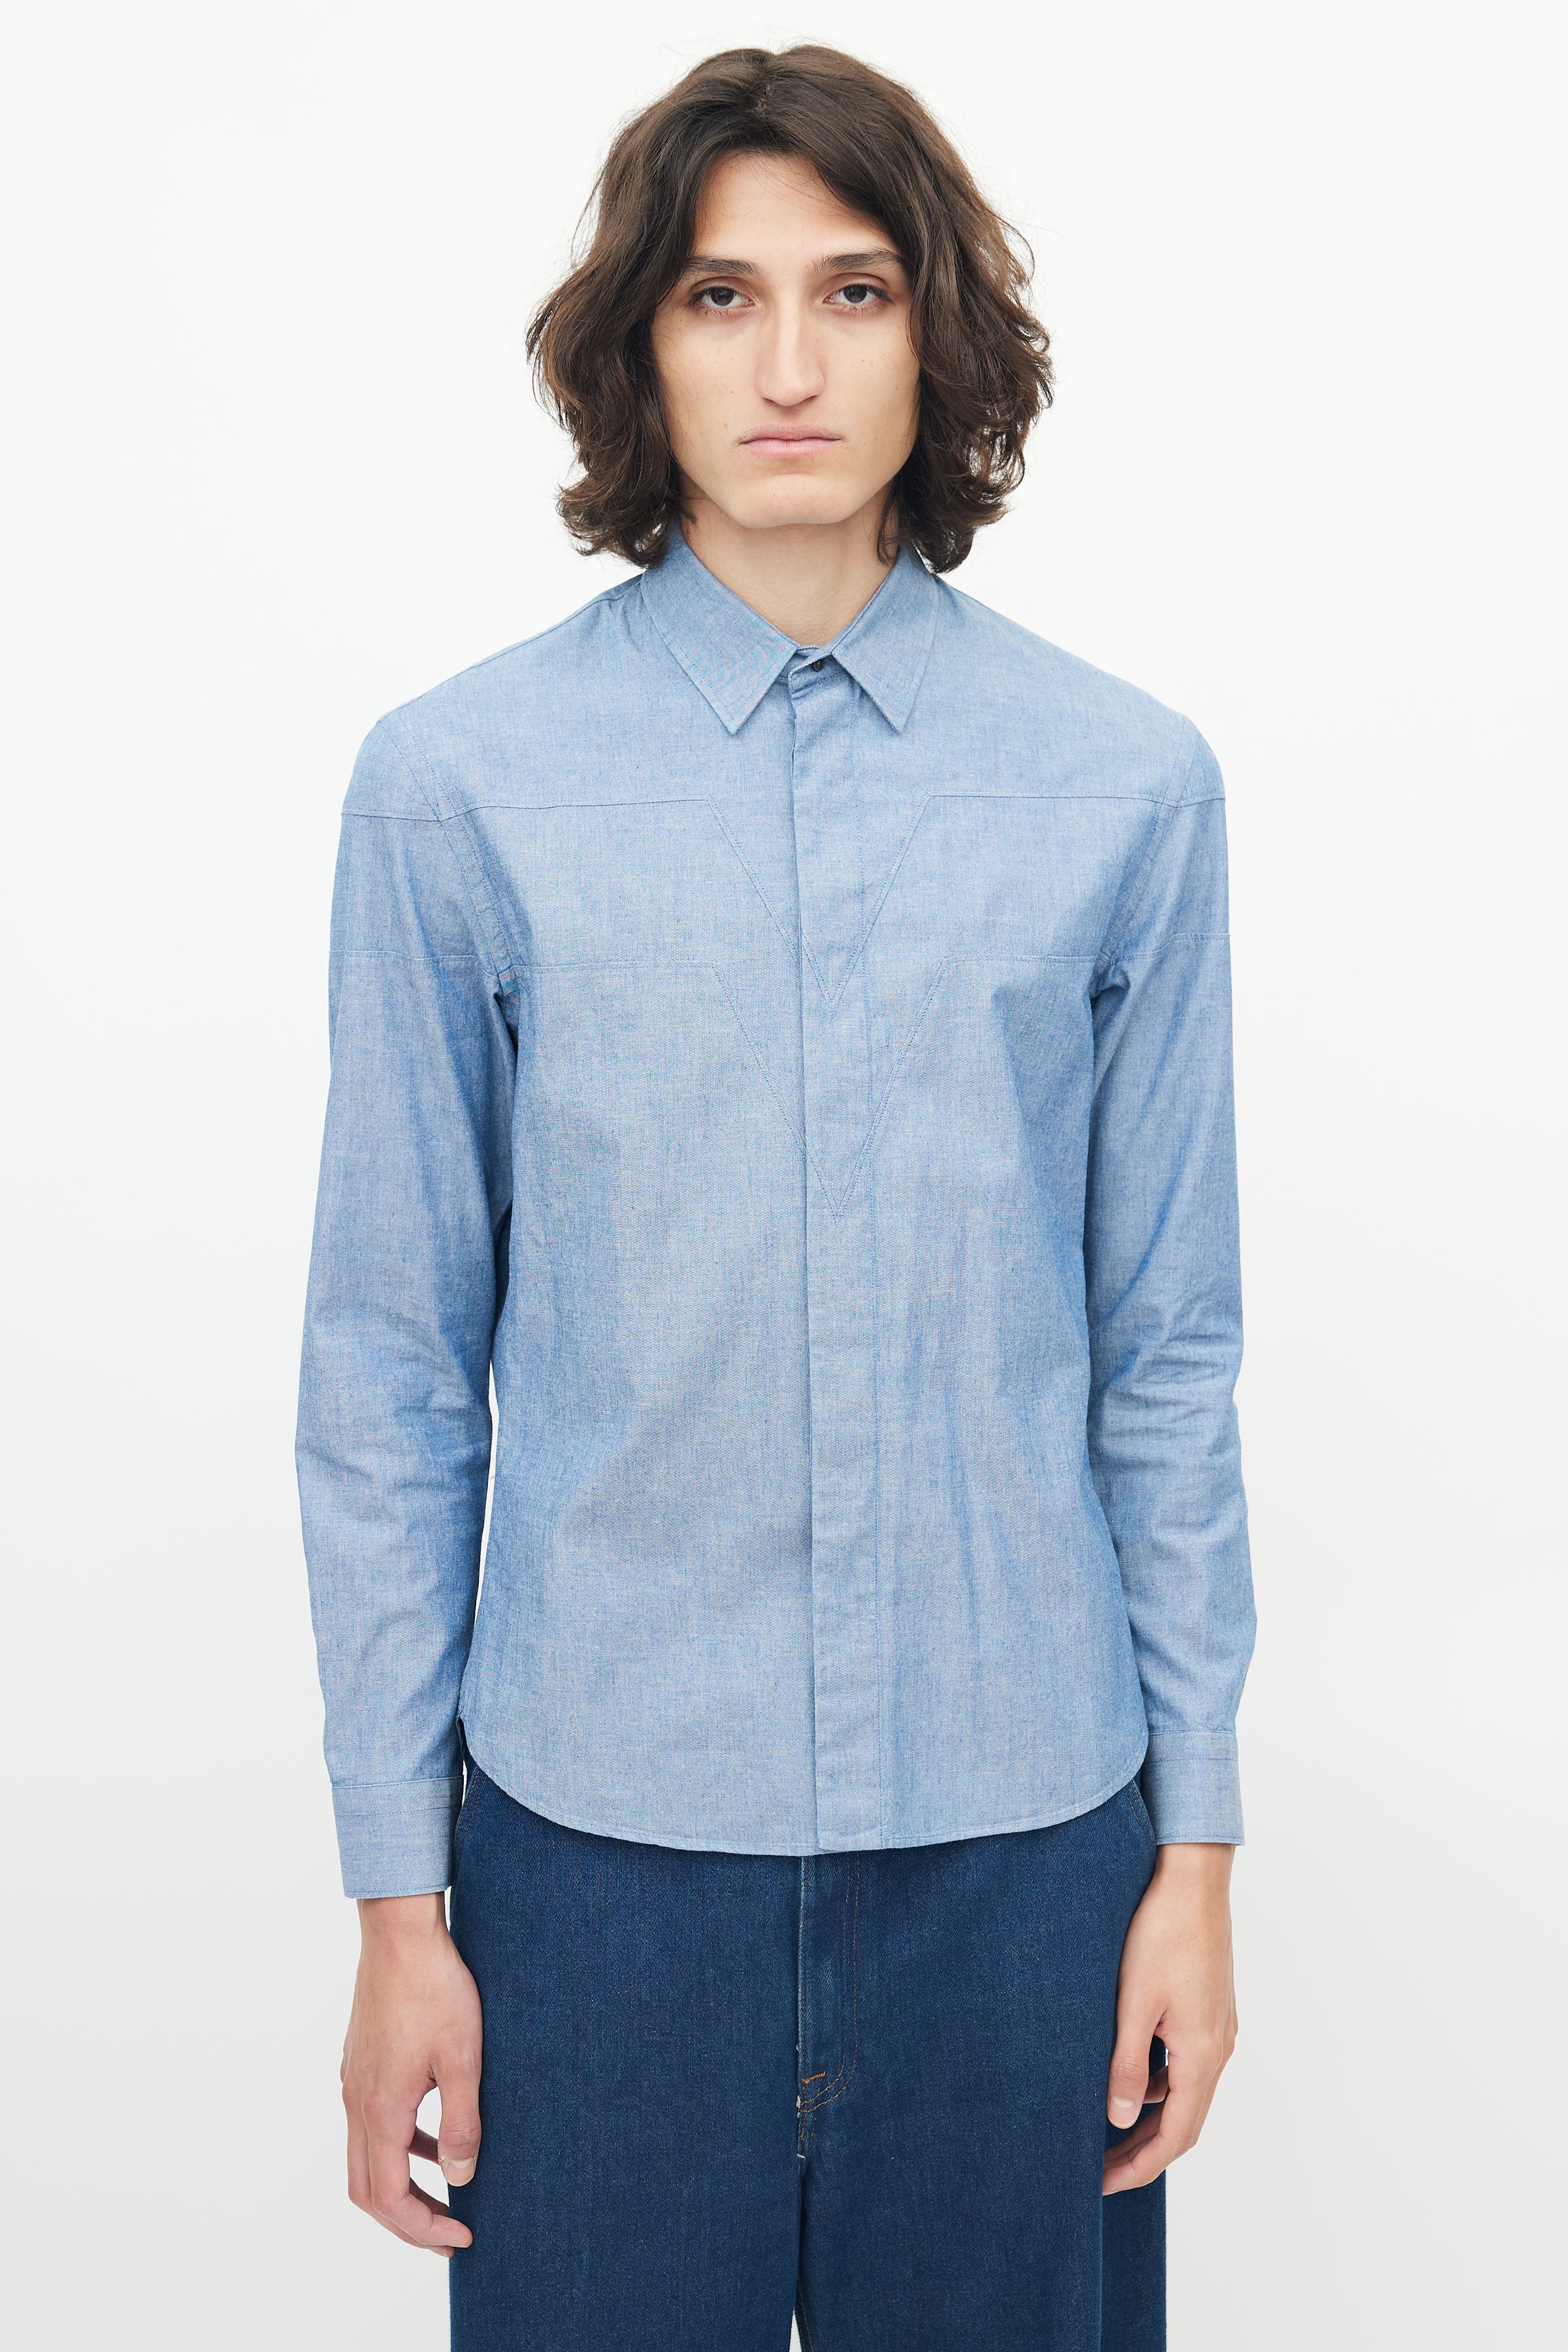 Louis Vuitton - Authenticated Shirt - Cotton Blue for Men, Very Good Condition